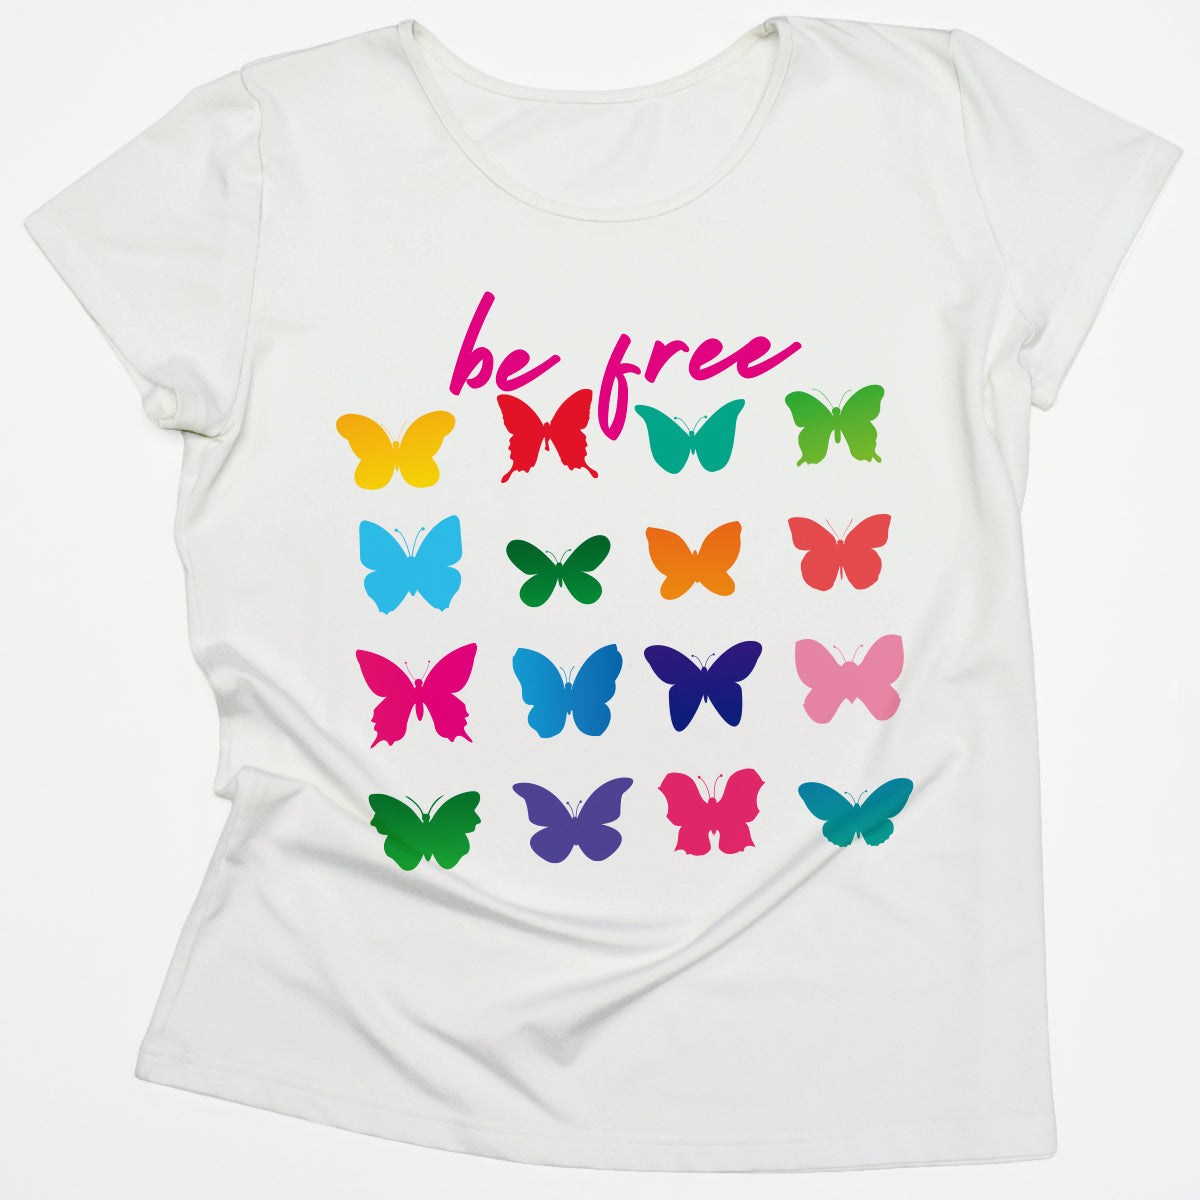 Be Free Butterflies White Short Sleeve Tee Shirt - Wimziy&Co.